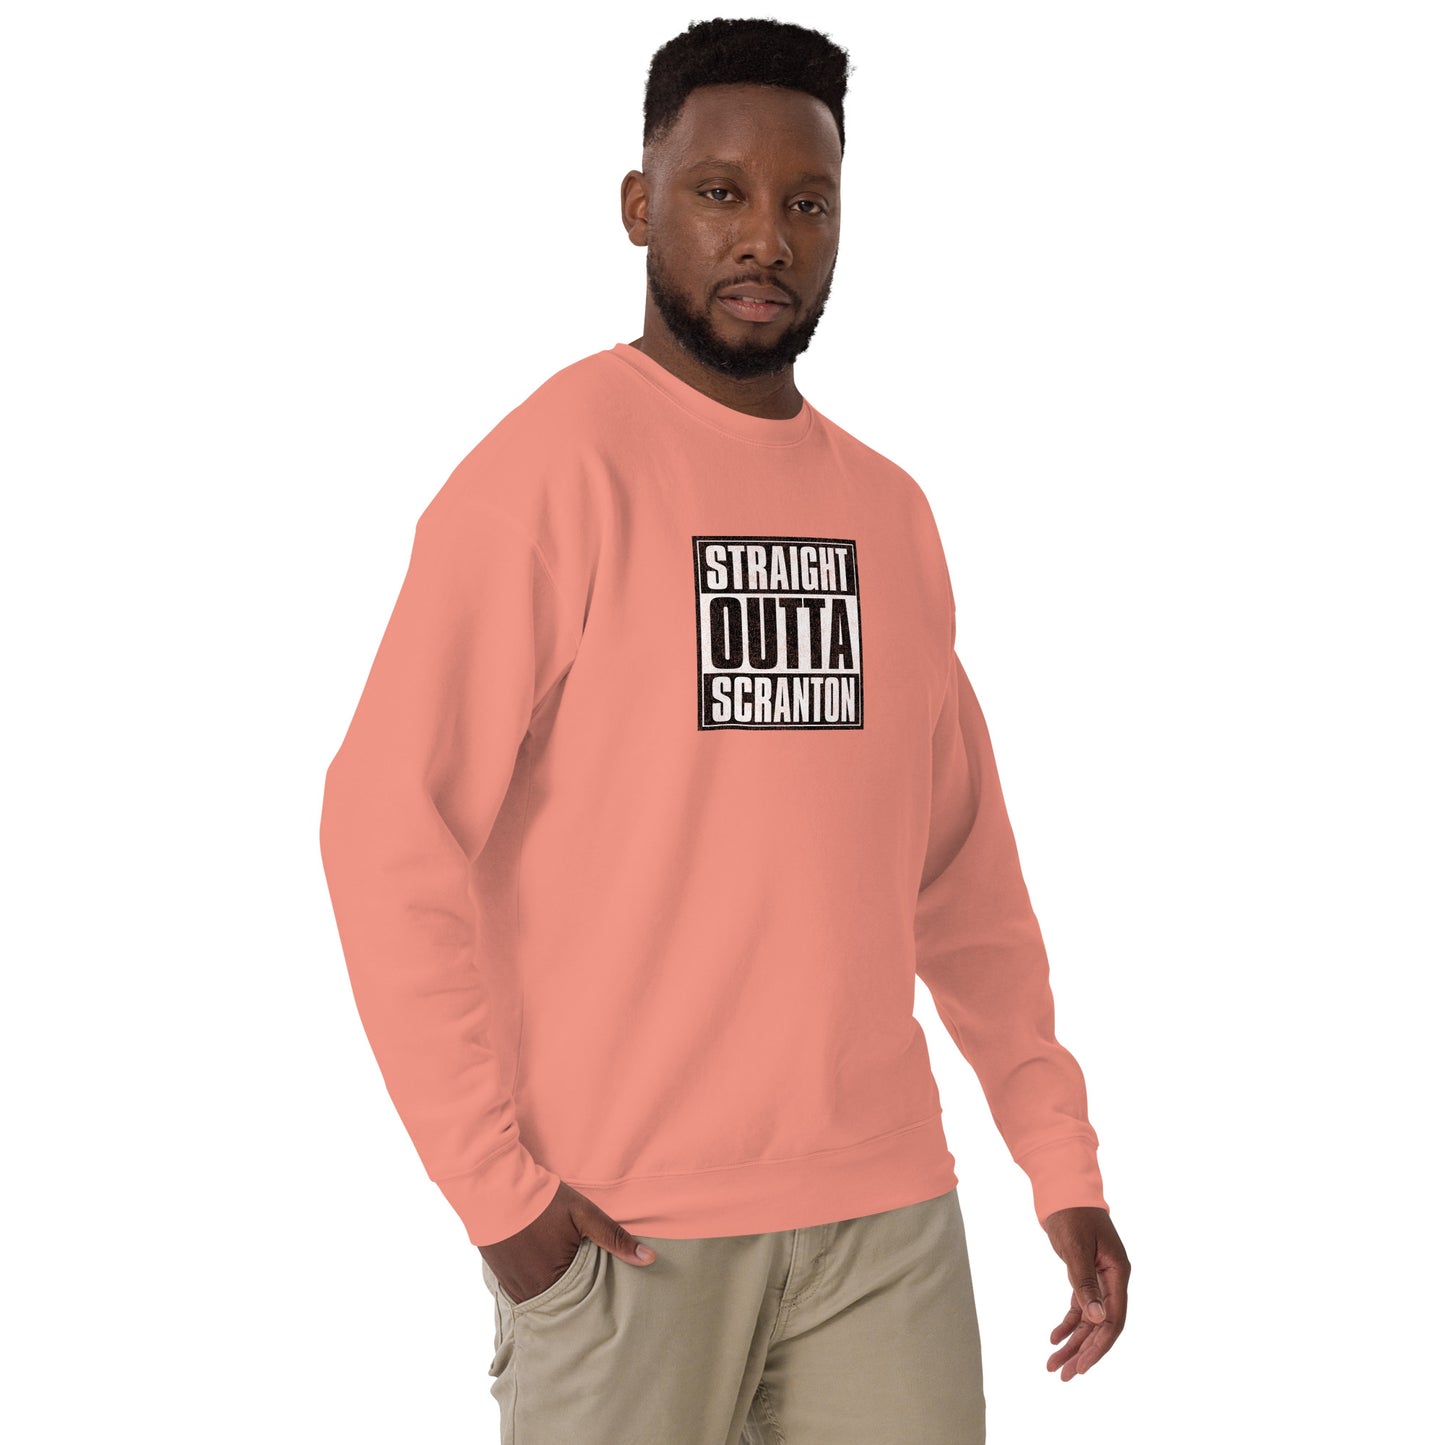 Straight Outta Scranton Unisex Premium Sweatshirt